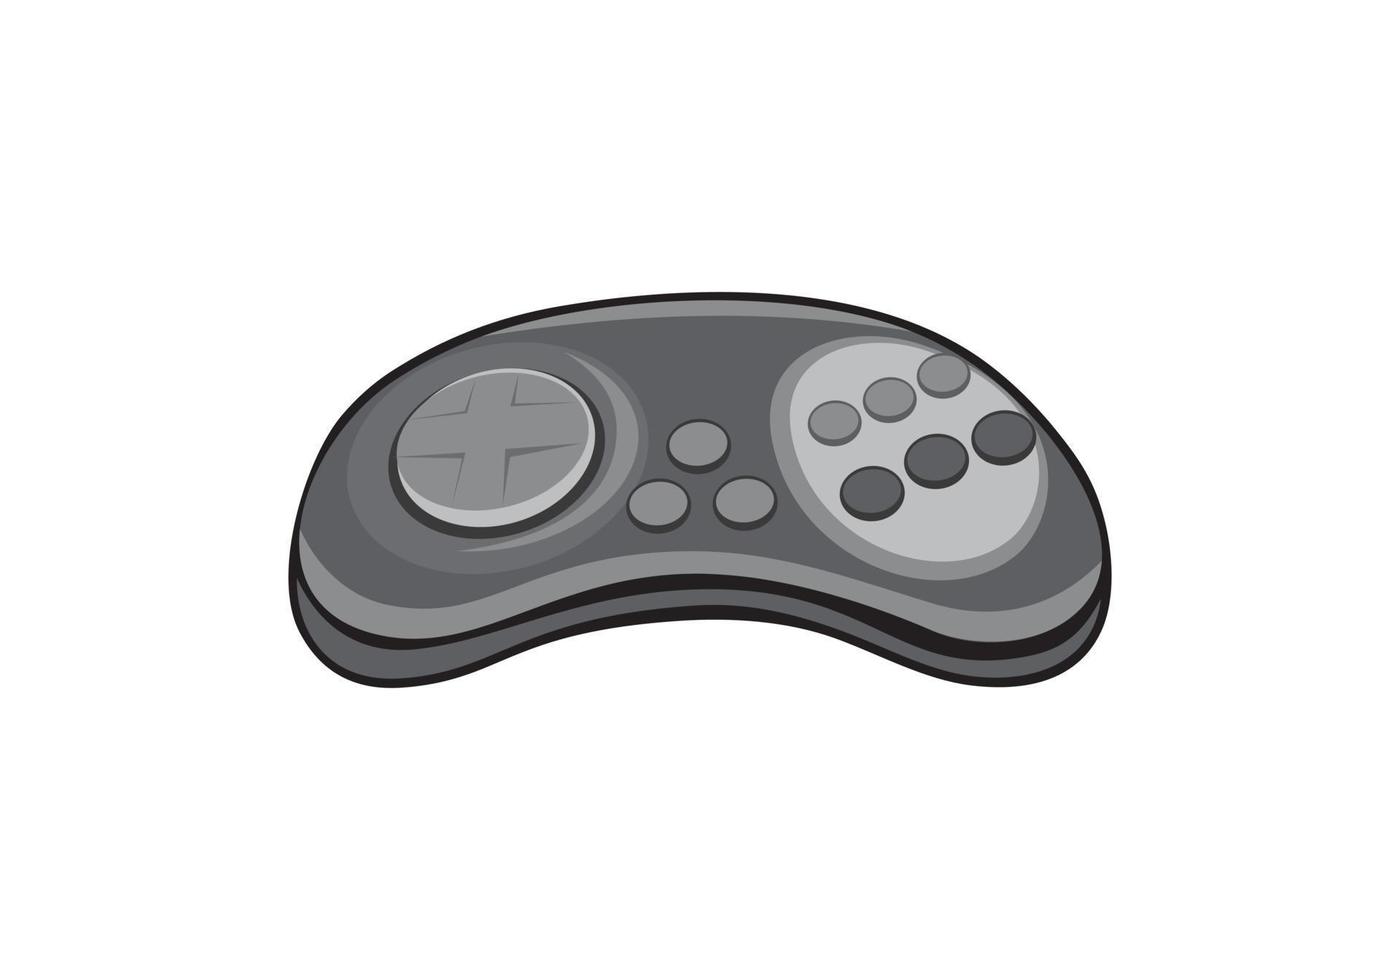 Classic sega stick controller game console design illustration vector